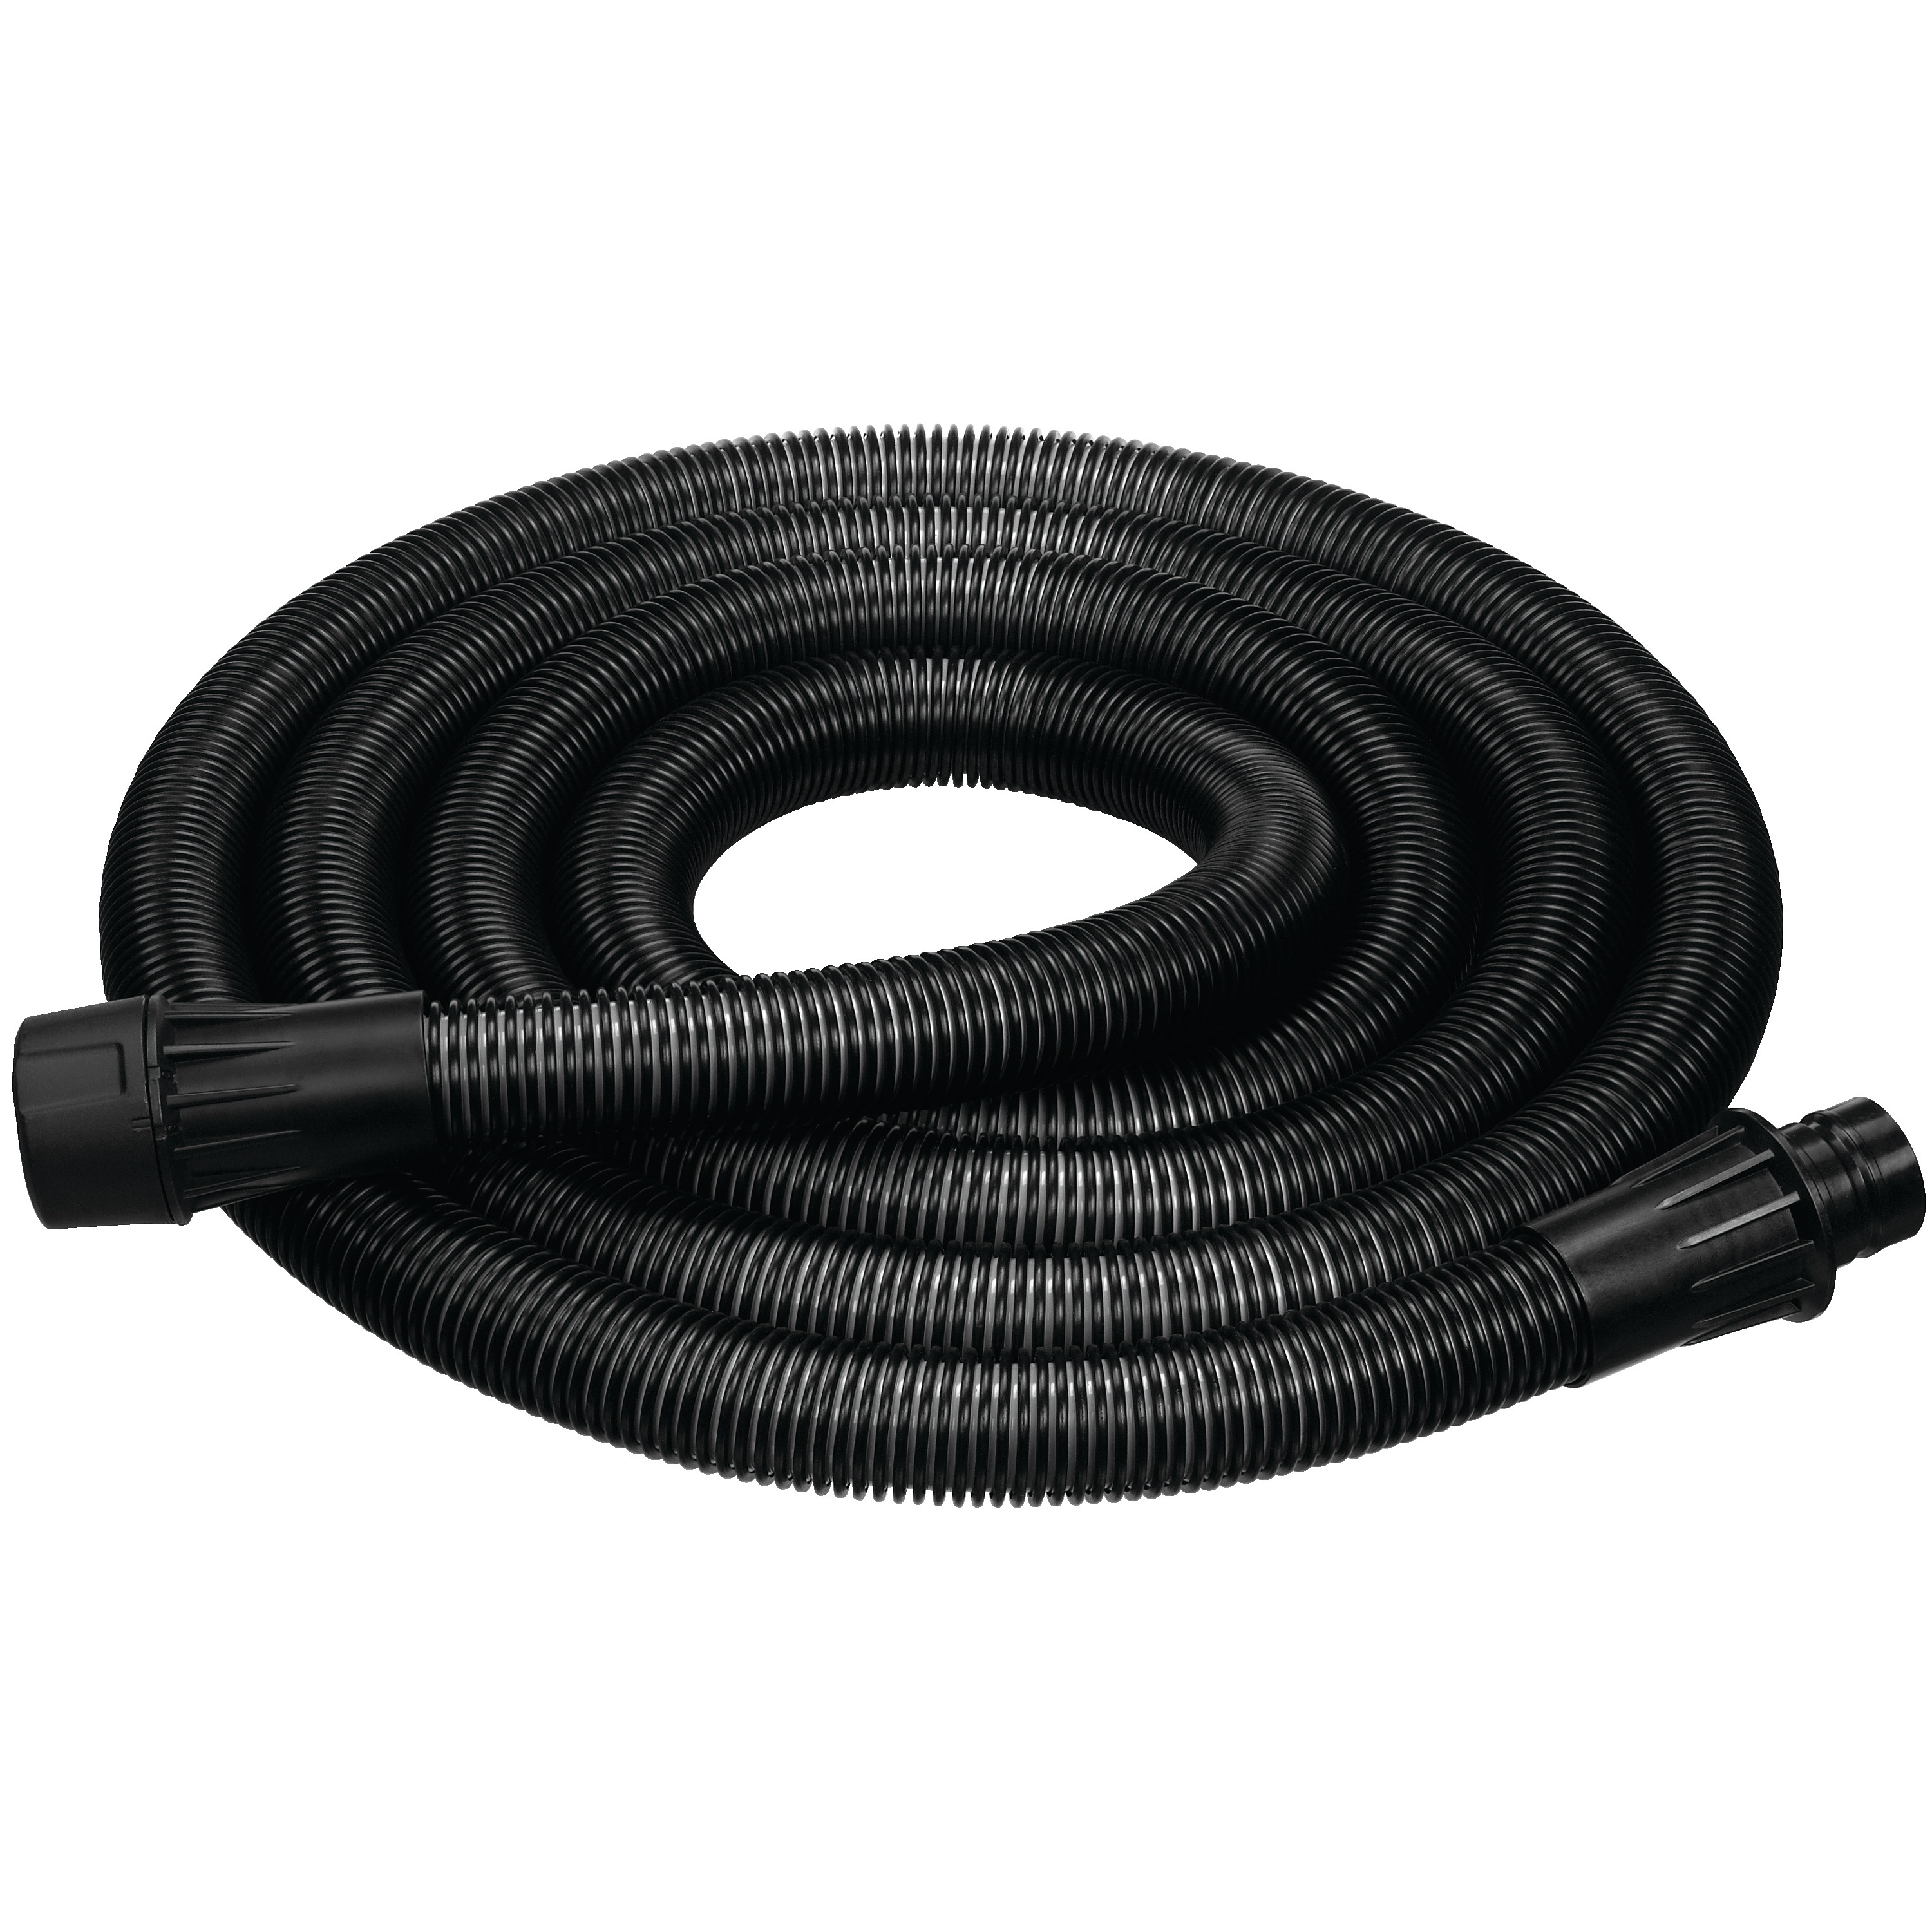 Replacement hose for DEWALT dust extractors.